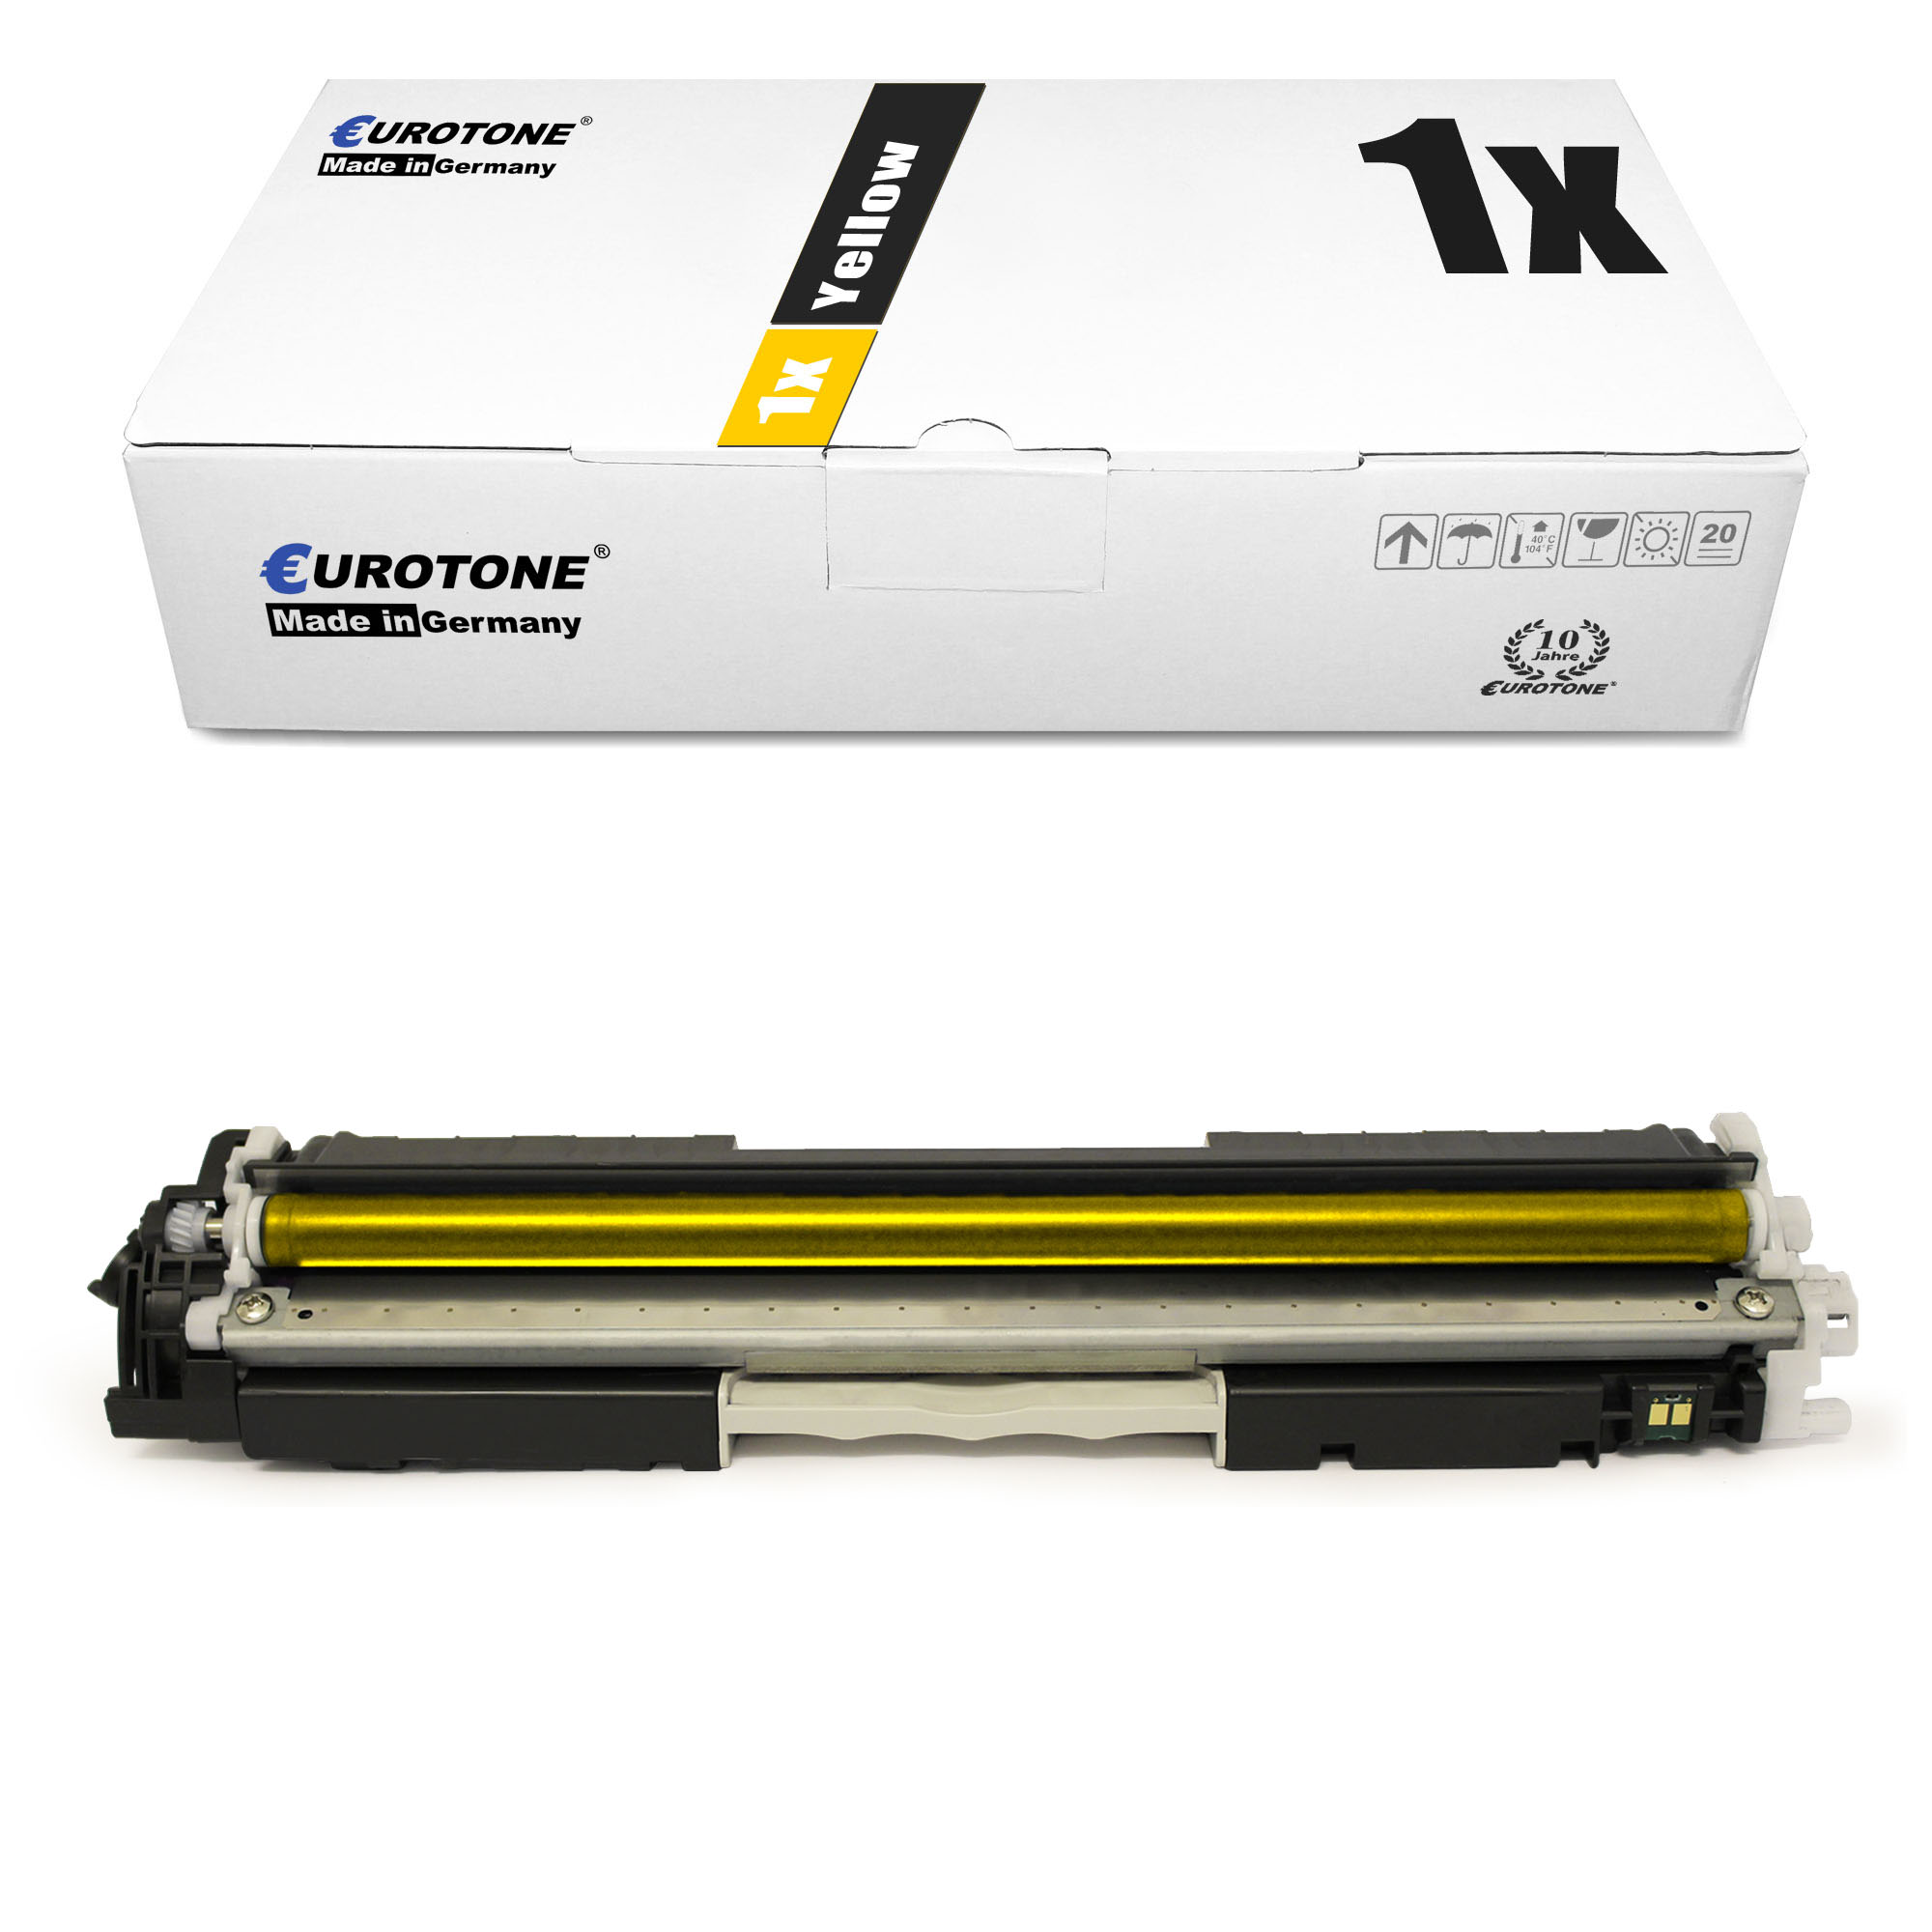 EUROTONE CP1021 1xY Toner Cartridge 126A) / CE312A Yellow (HP